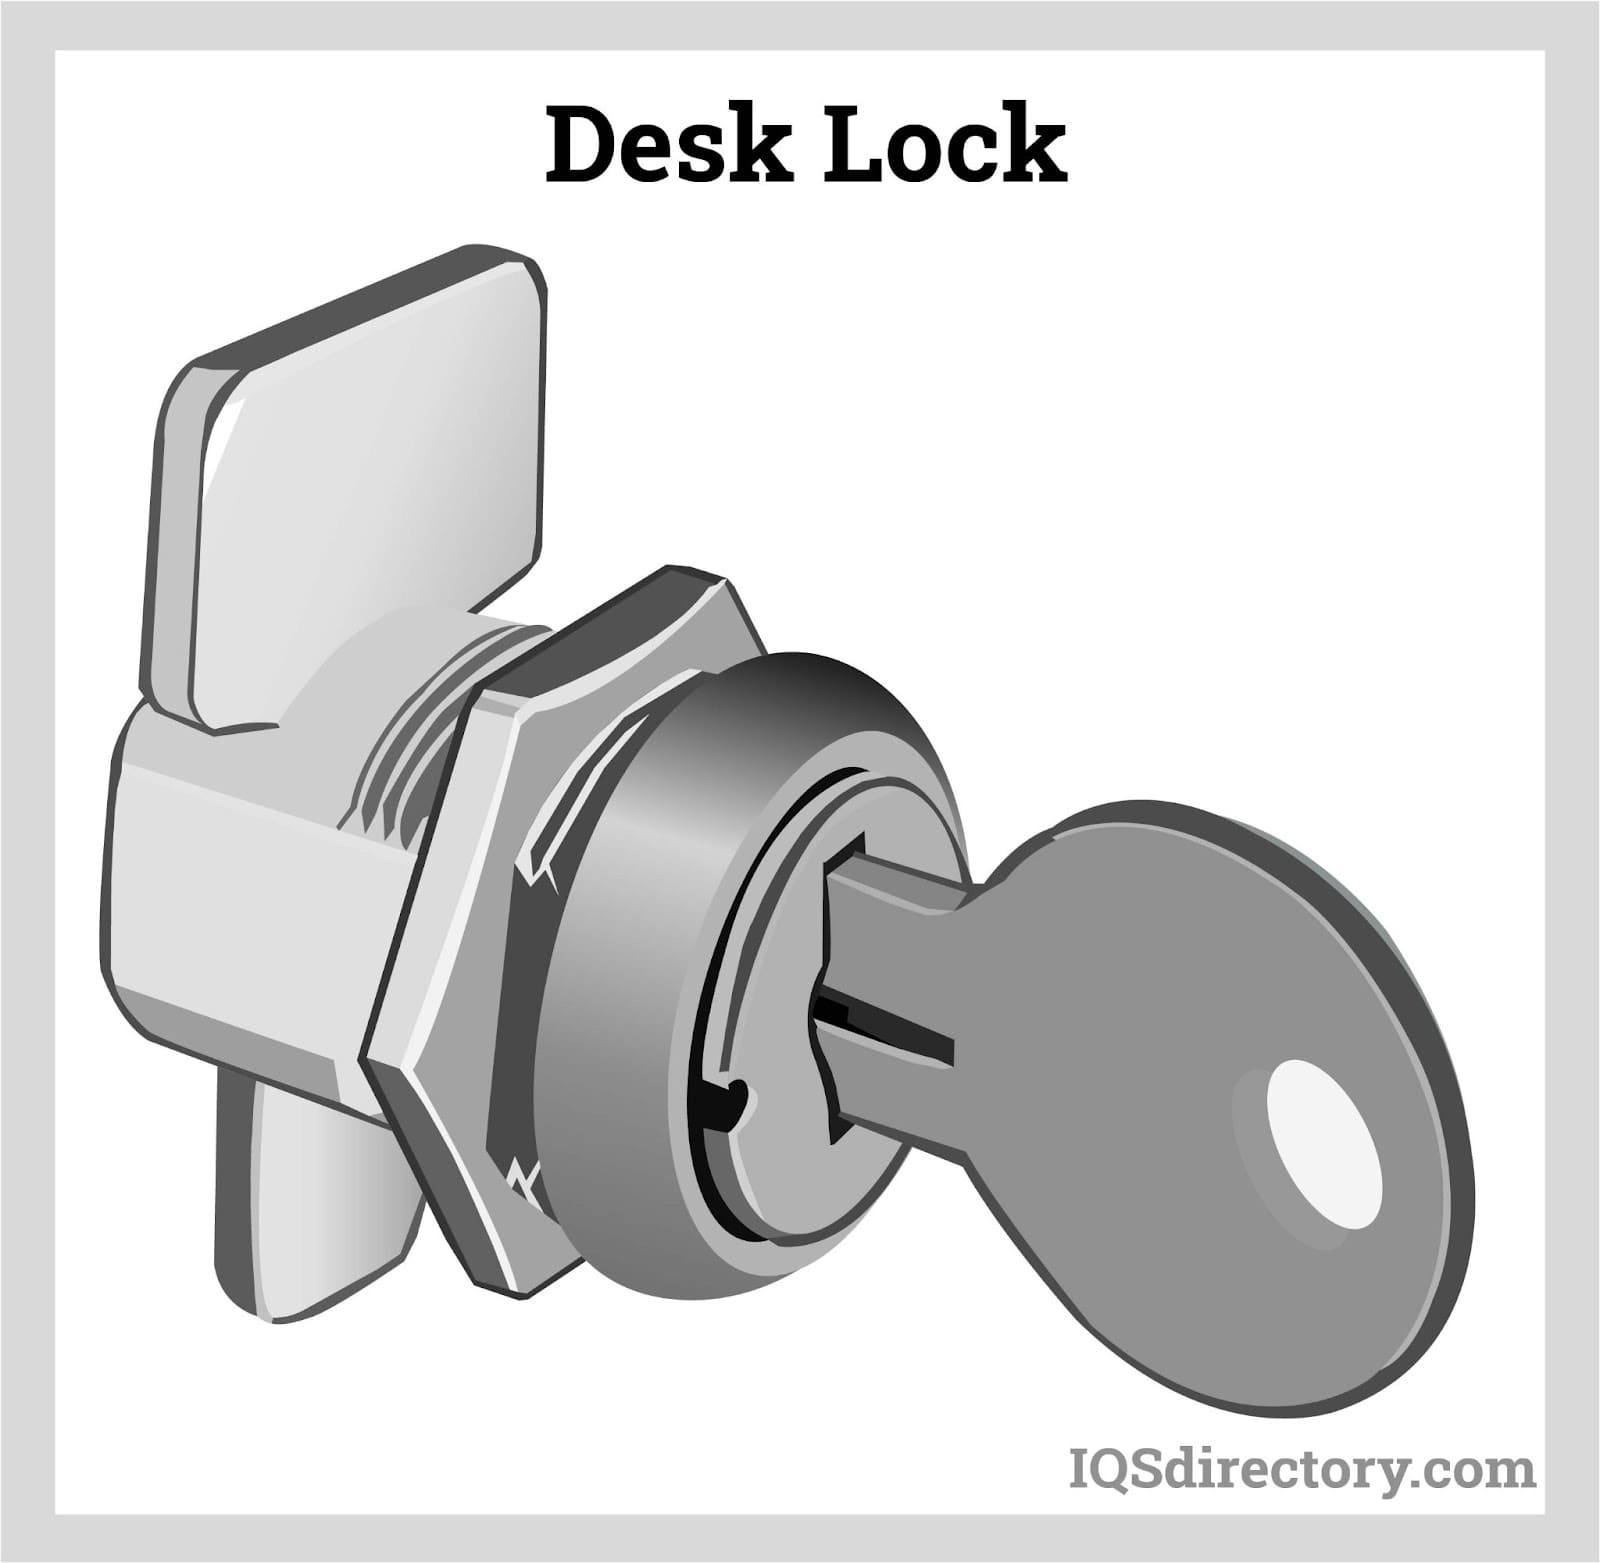 2 Pcs cabinet door locker Decorative Locks for Cabinets Box Locks